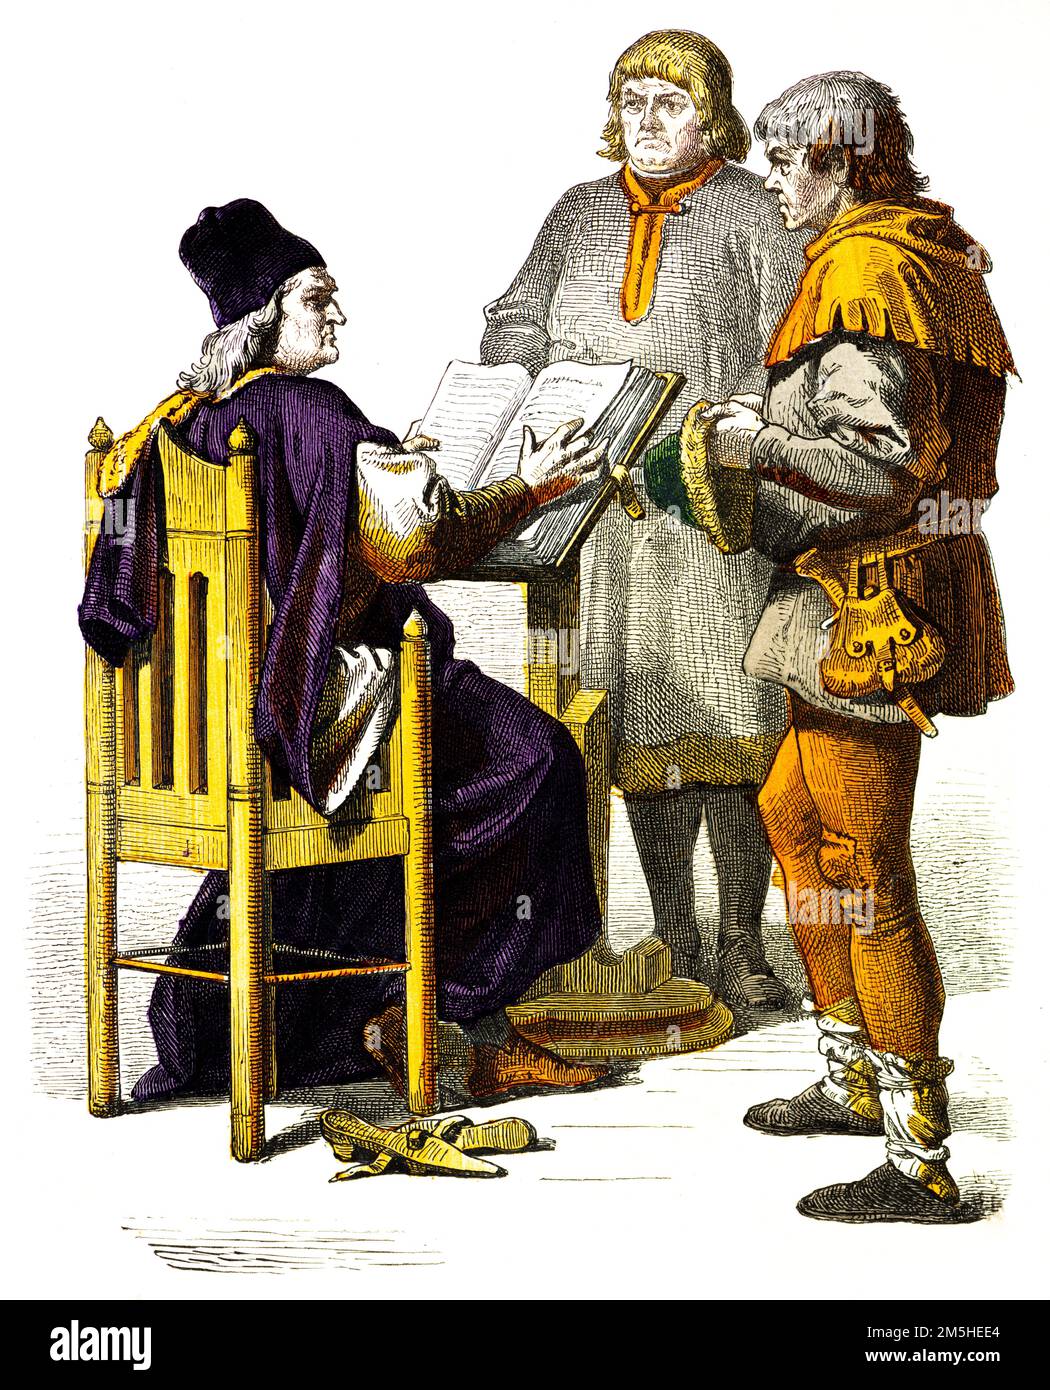 Historical costumes at the beginning of 15th century, historical illustration, Münchener Bilderbogen, München 1890 Stock Photo